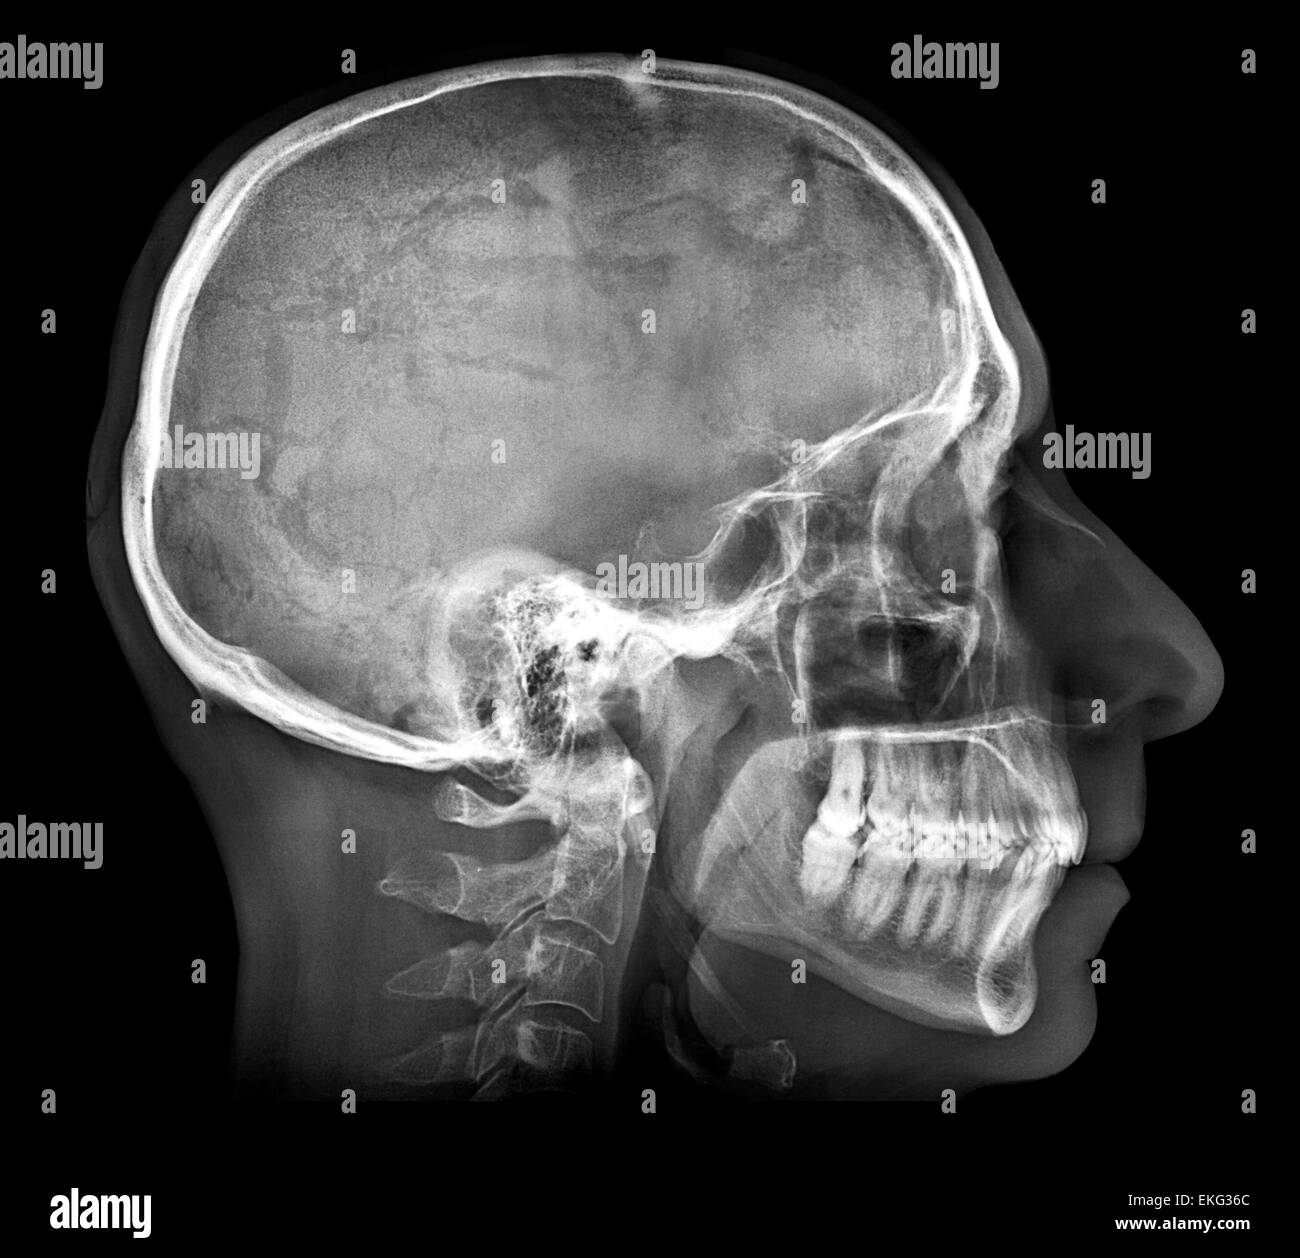 Human skull X-ray image isolated on black Stock Photo